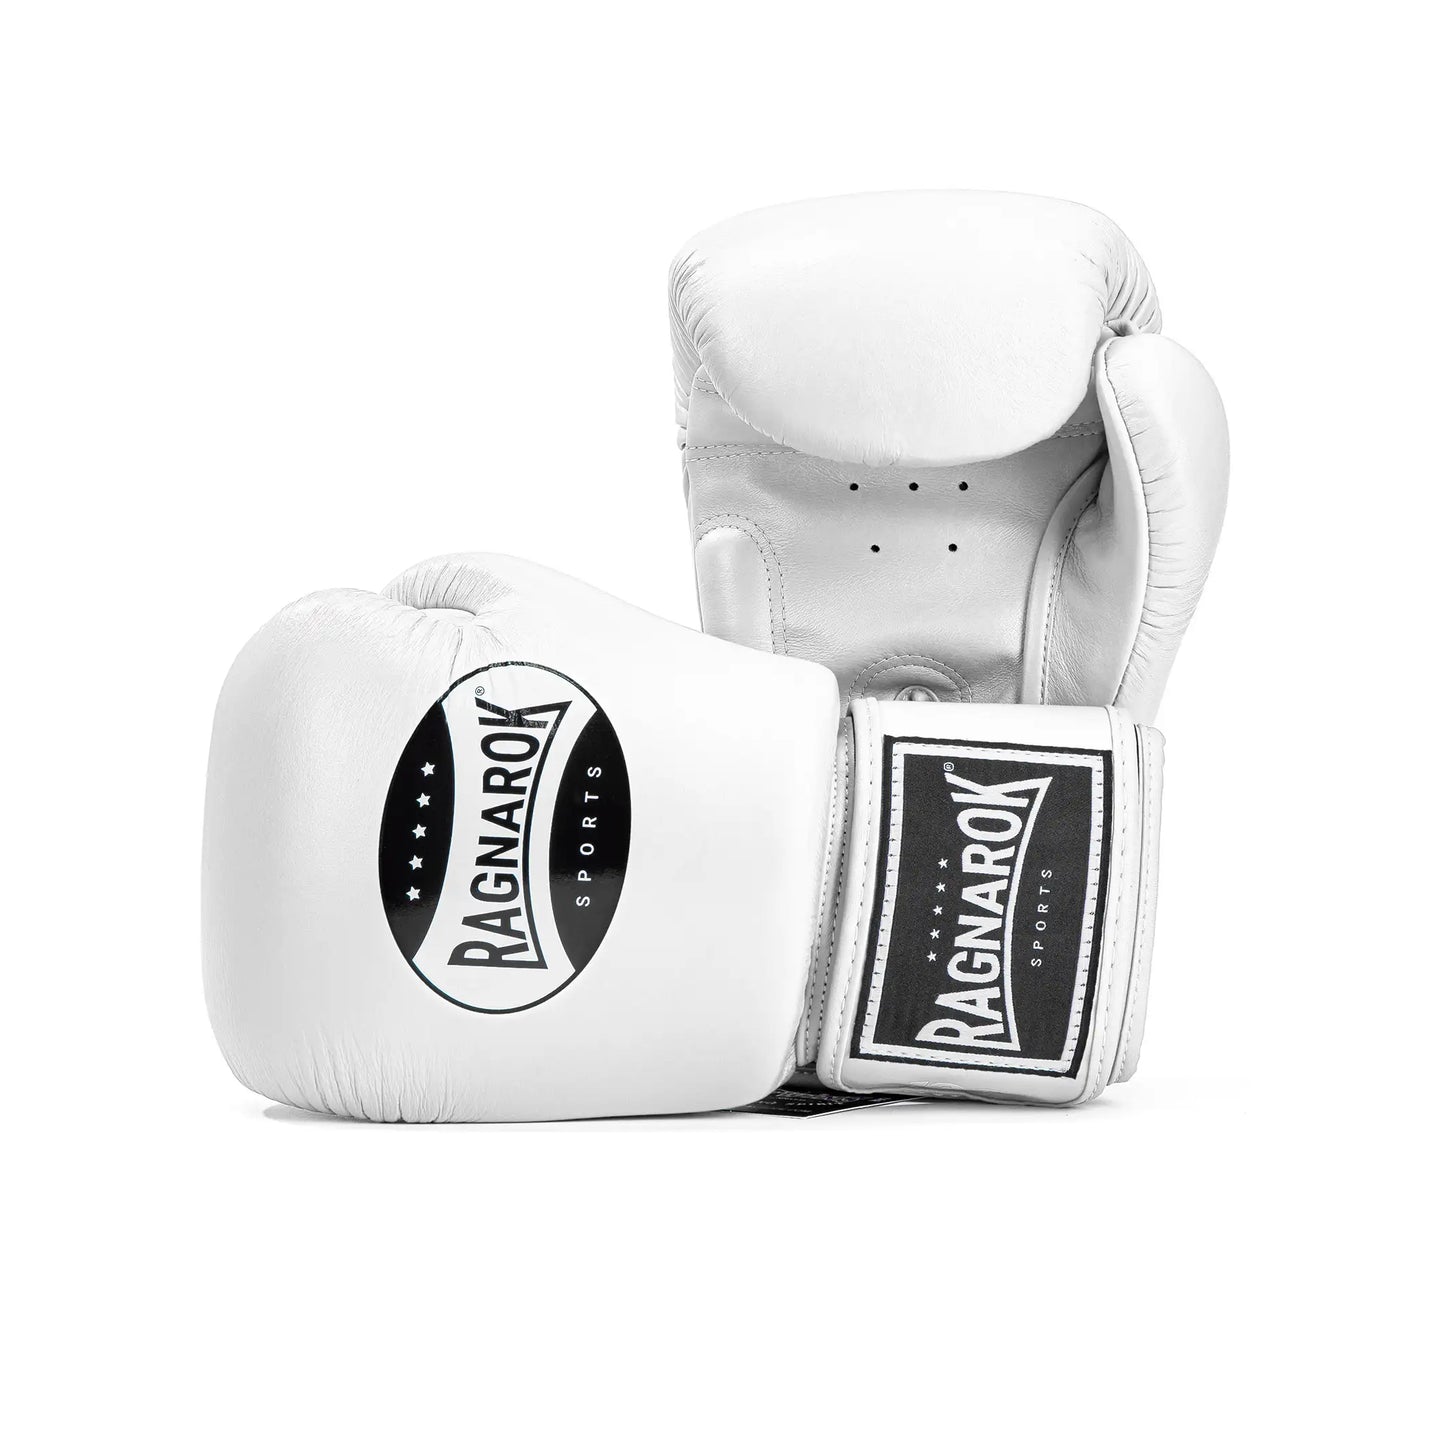 Boxing Gloves Ragnarok Sports White